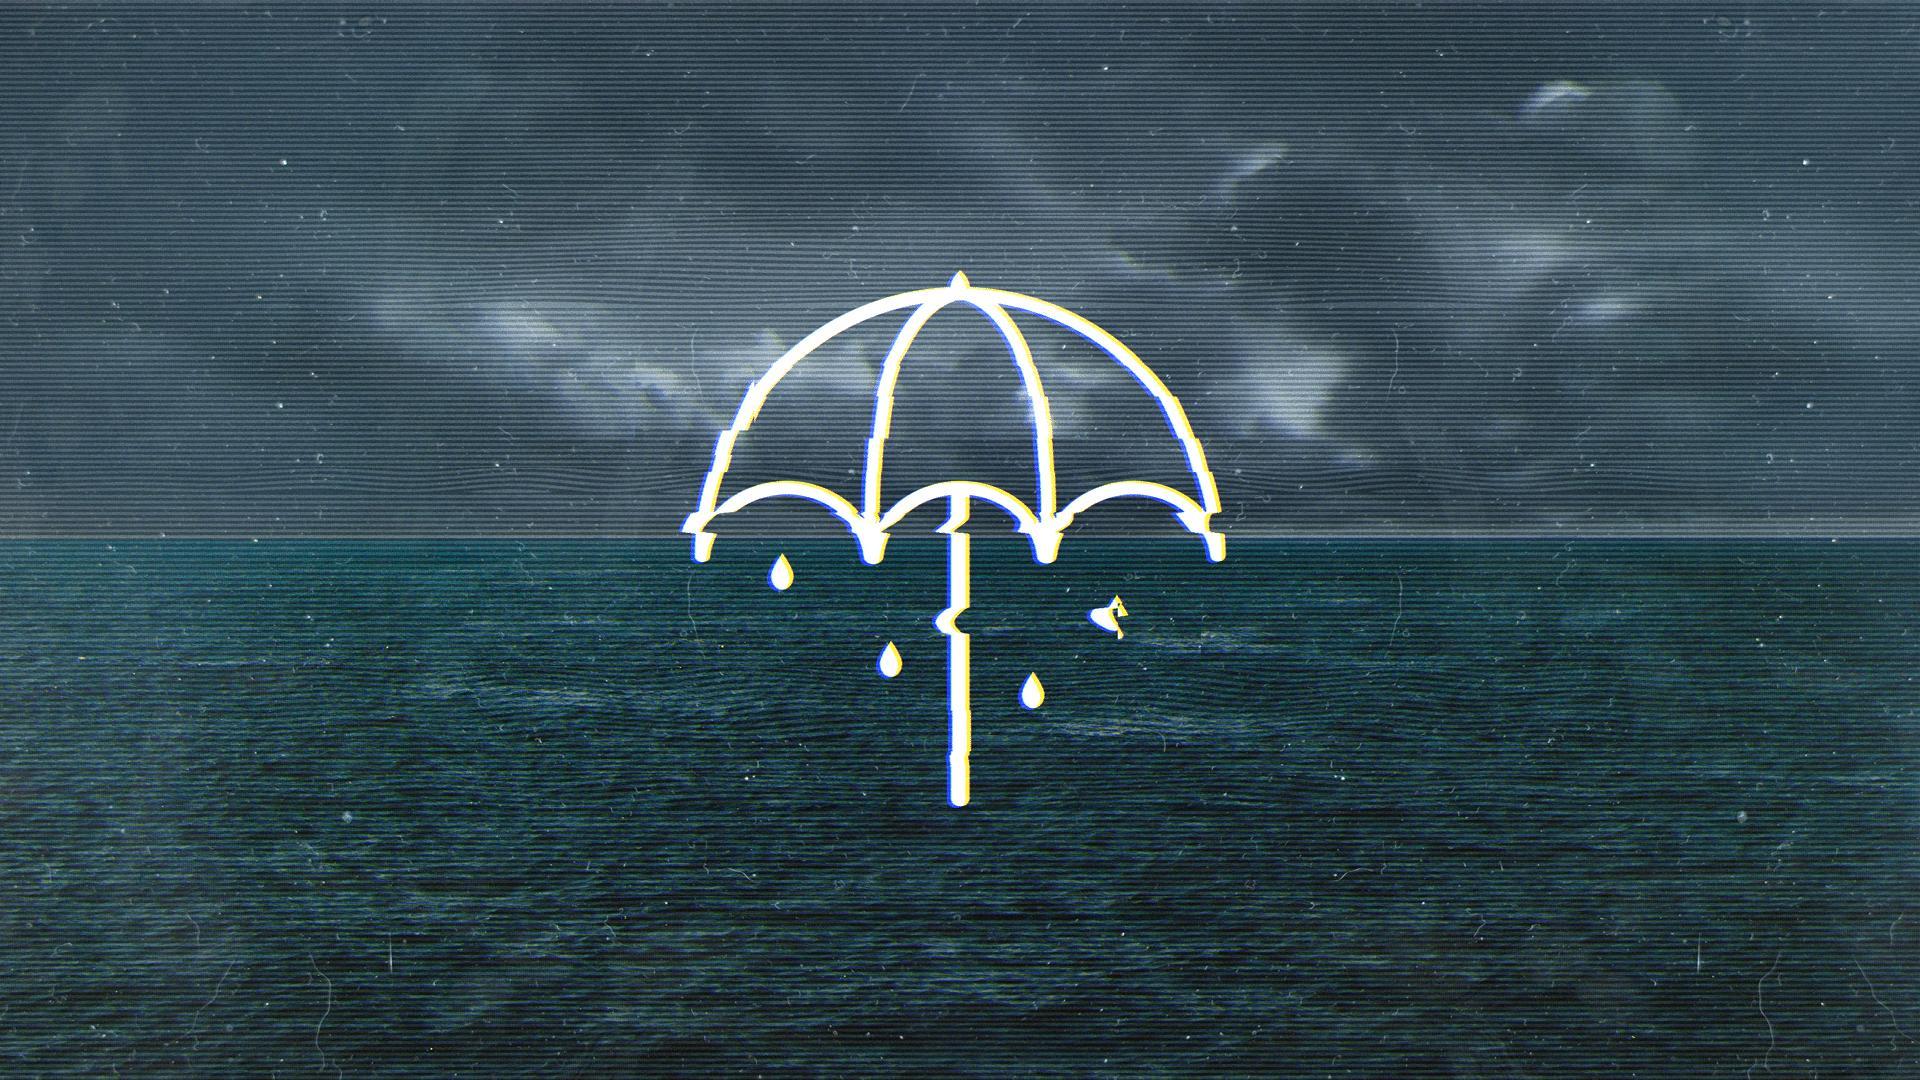 Bring Me the Horizon Umbrella Logo - Just made a quick wallpaper with the umbrella logo. I'll be taking ...